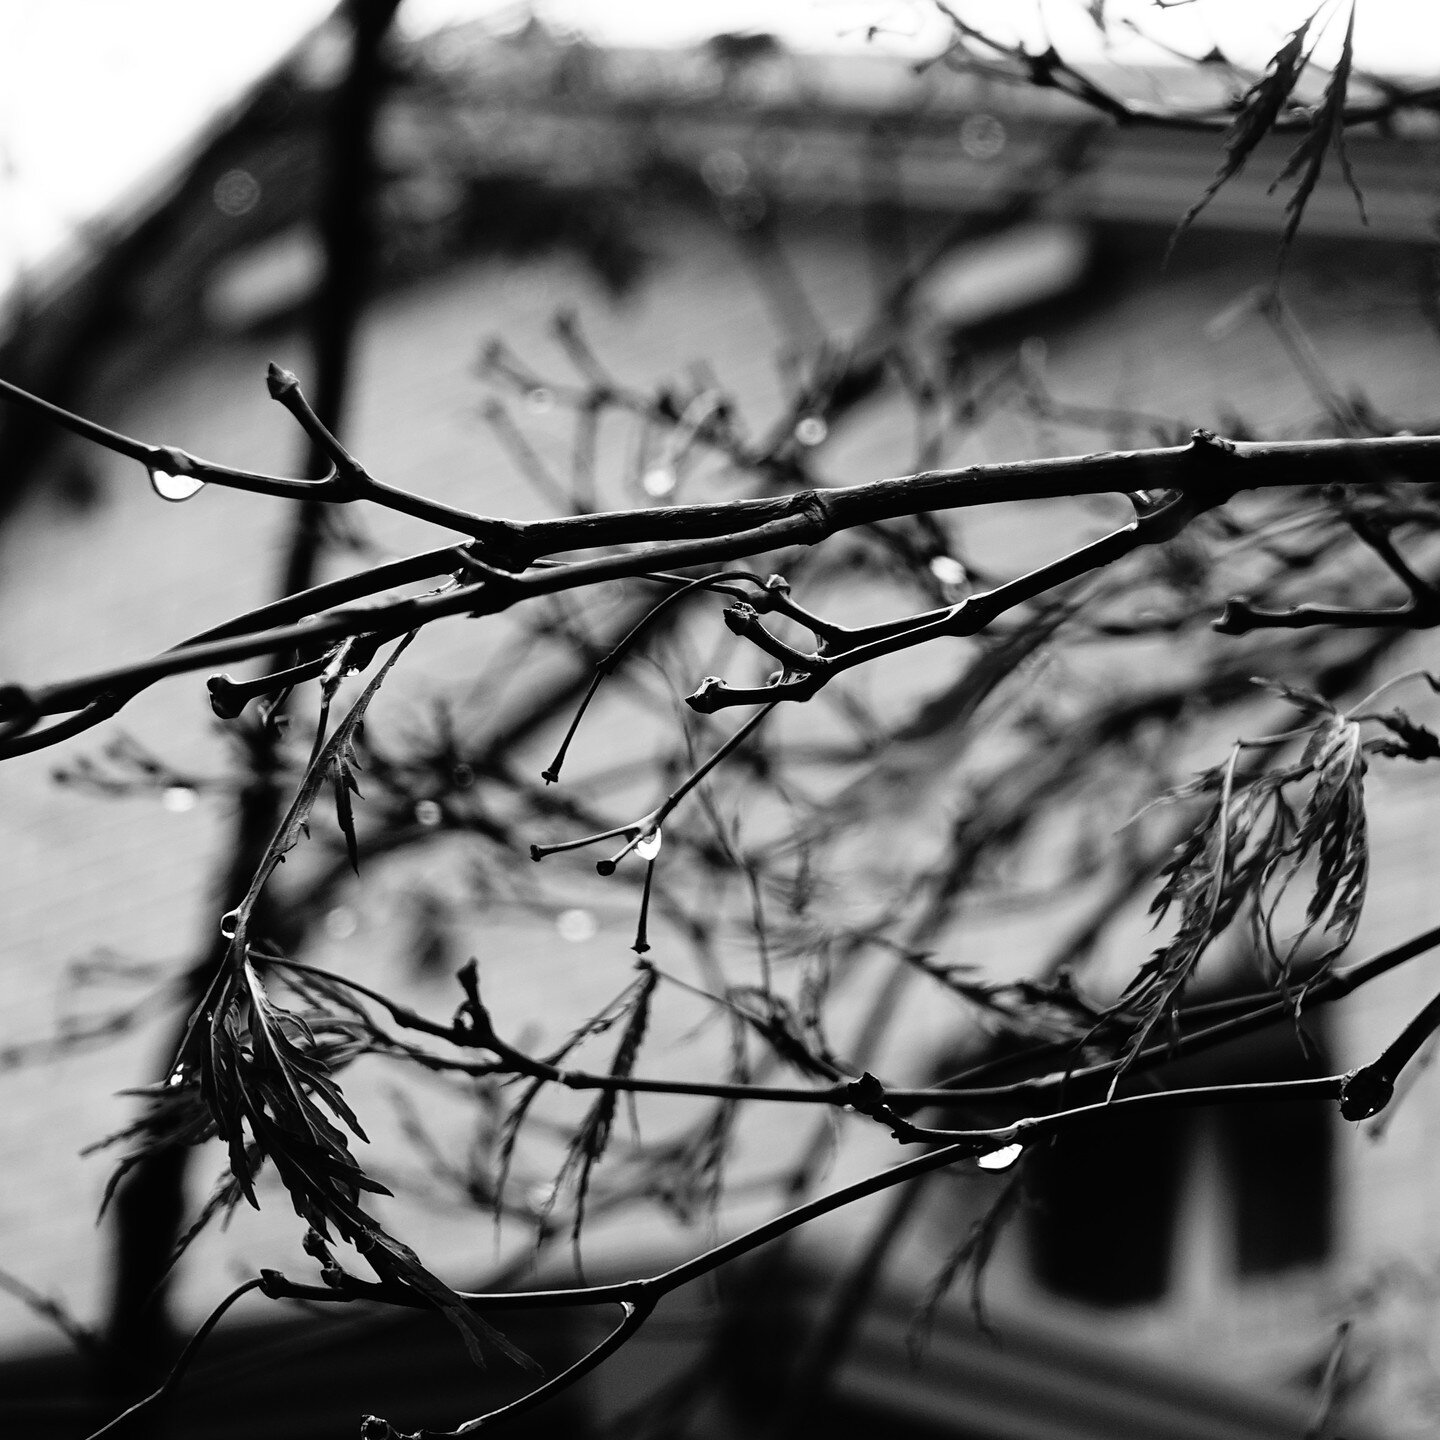 spring rain

#bnw_capture #bnw_image #bnwlife #grayscale #bw_crew #bwphotography #monocrome #colorless #retro #darkroom #fineart #photobw #fineartphotography #photo #noir #insta_bw #instablackandwhite #seoul #jongno #spring #raindrop